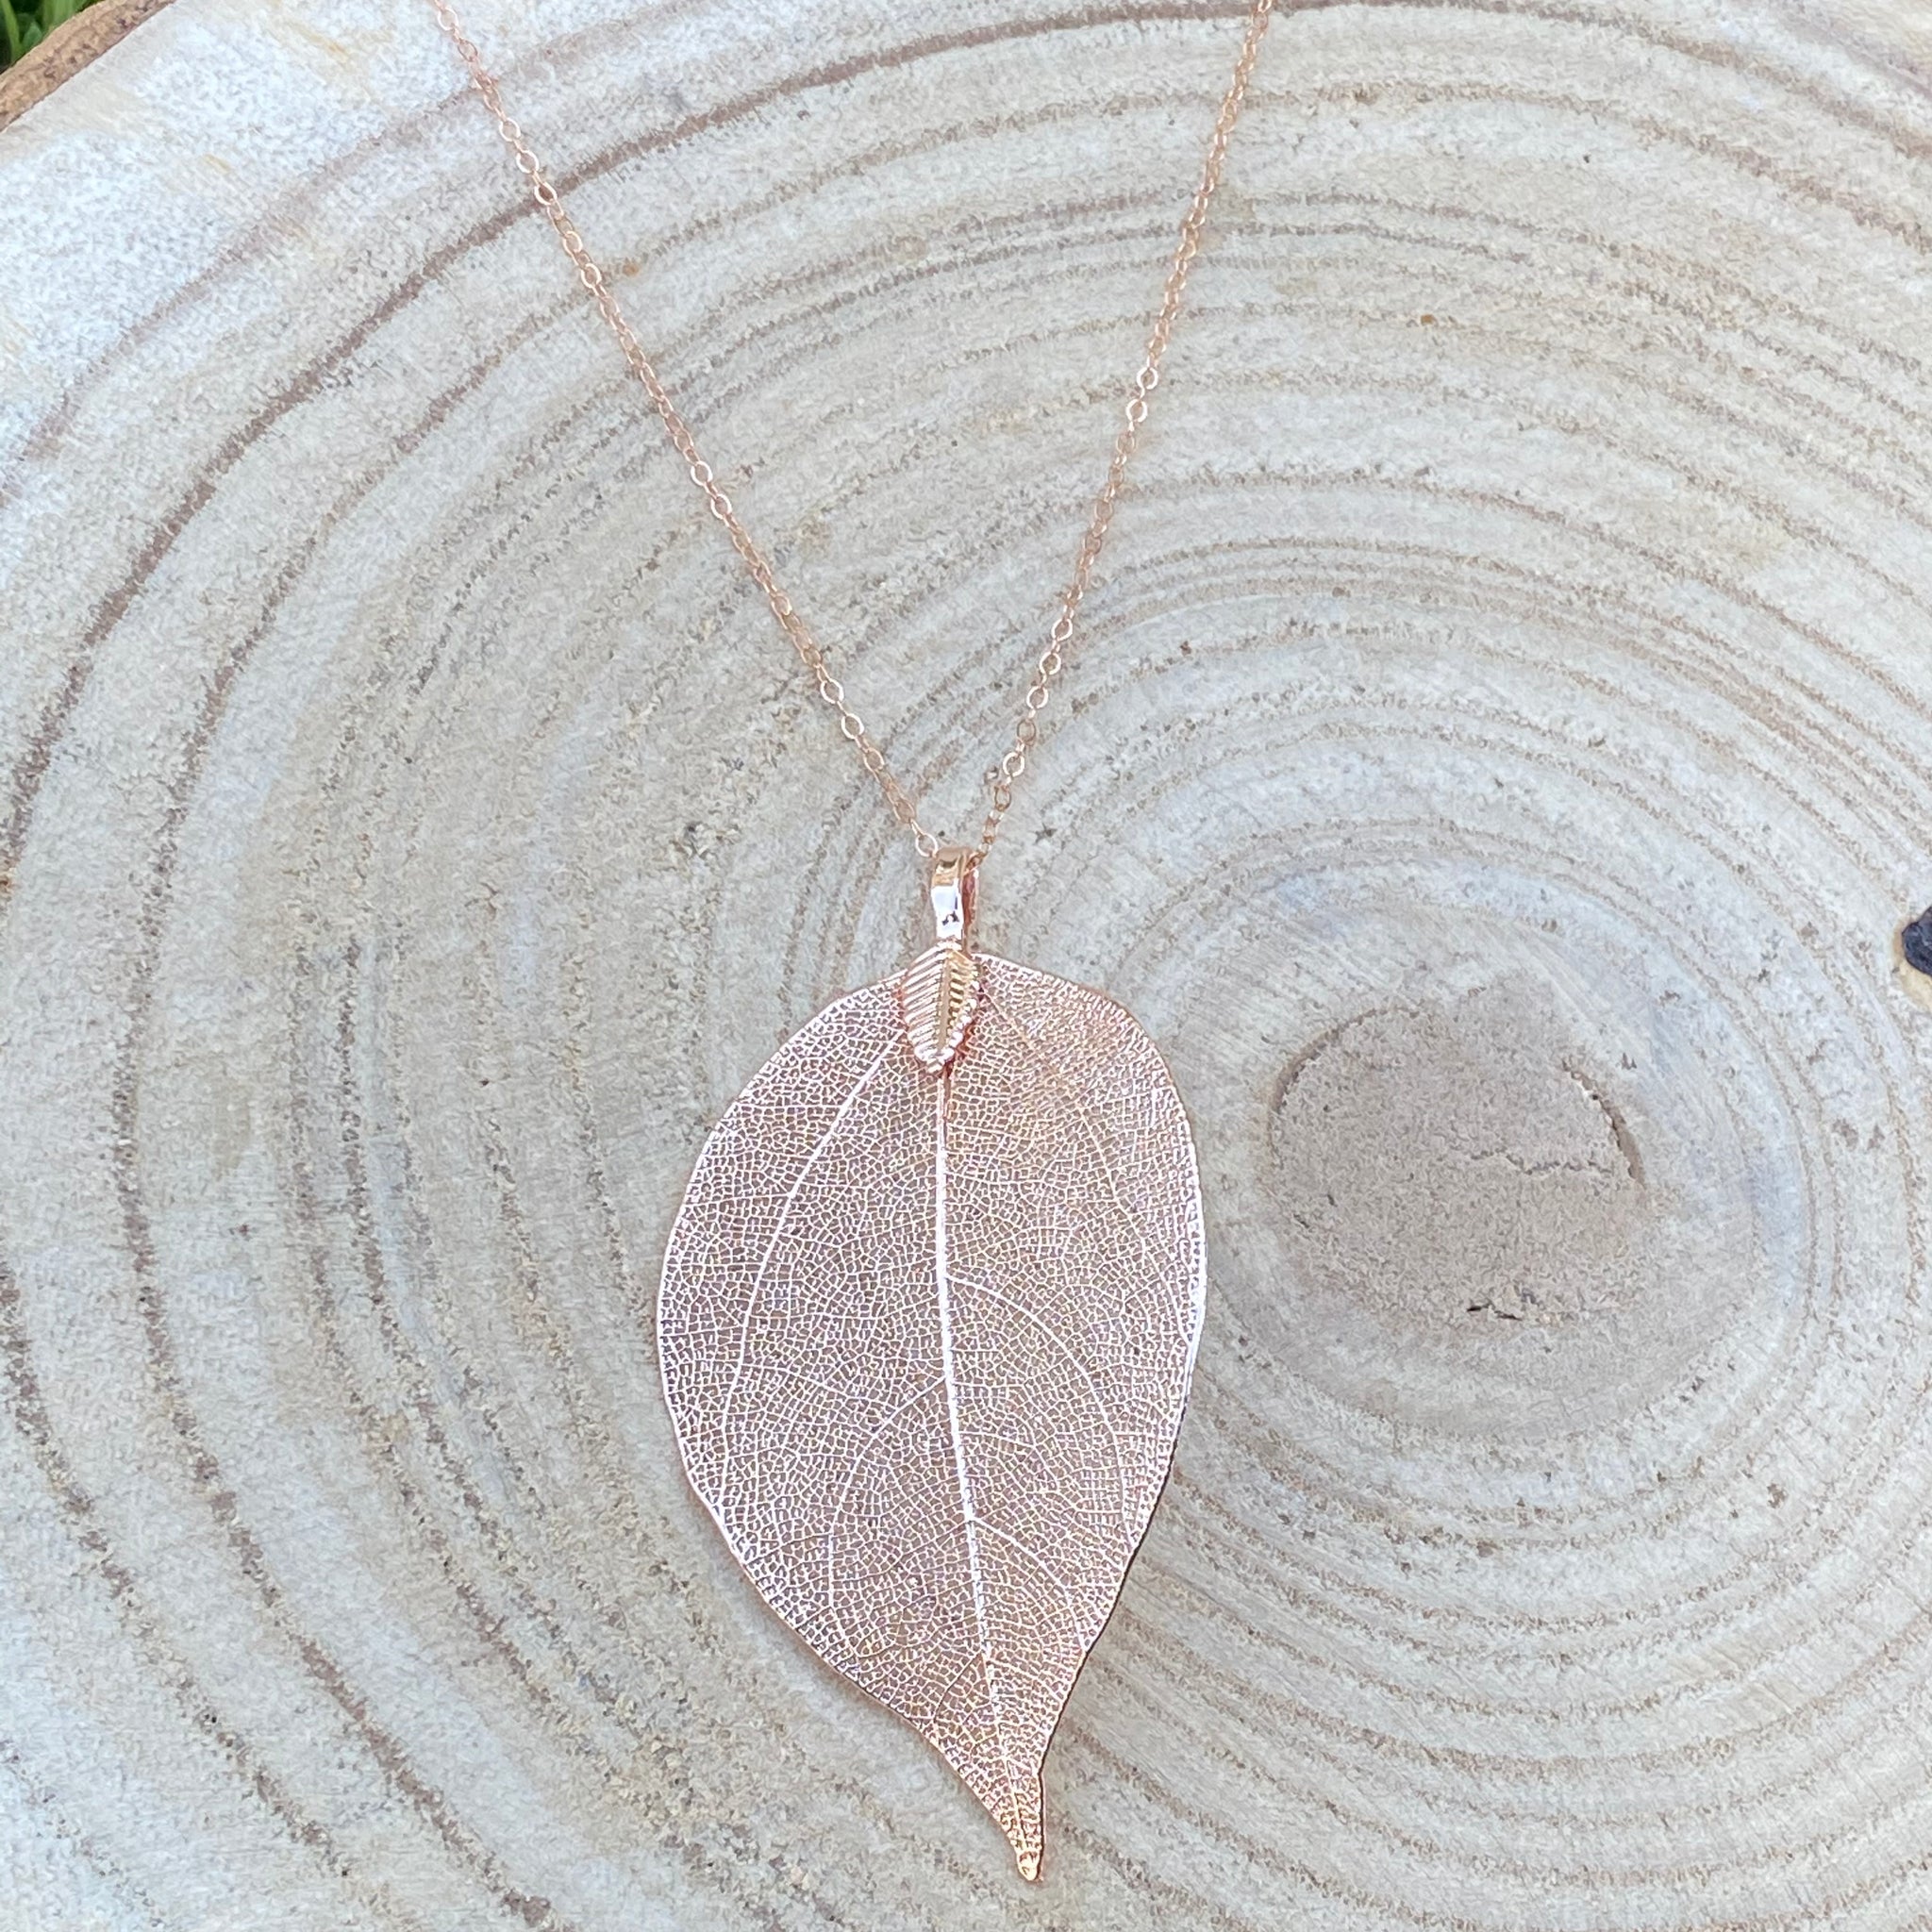 Real leaf pendant necklace, long rose gold necklace